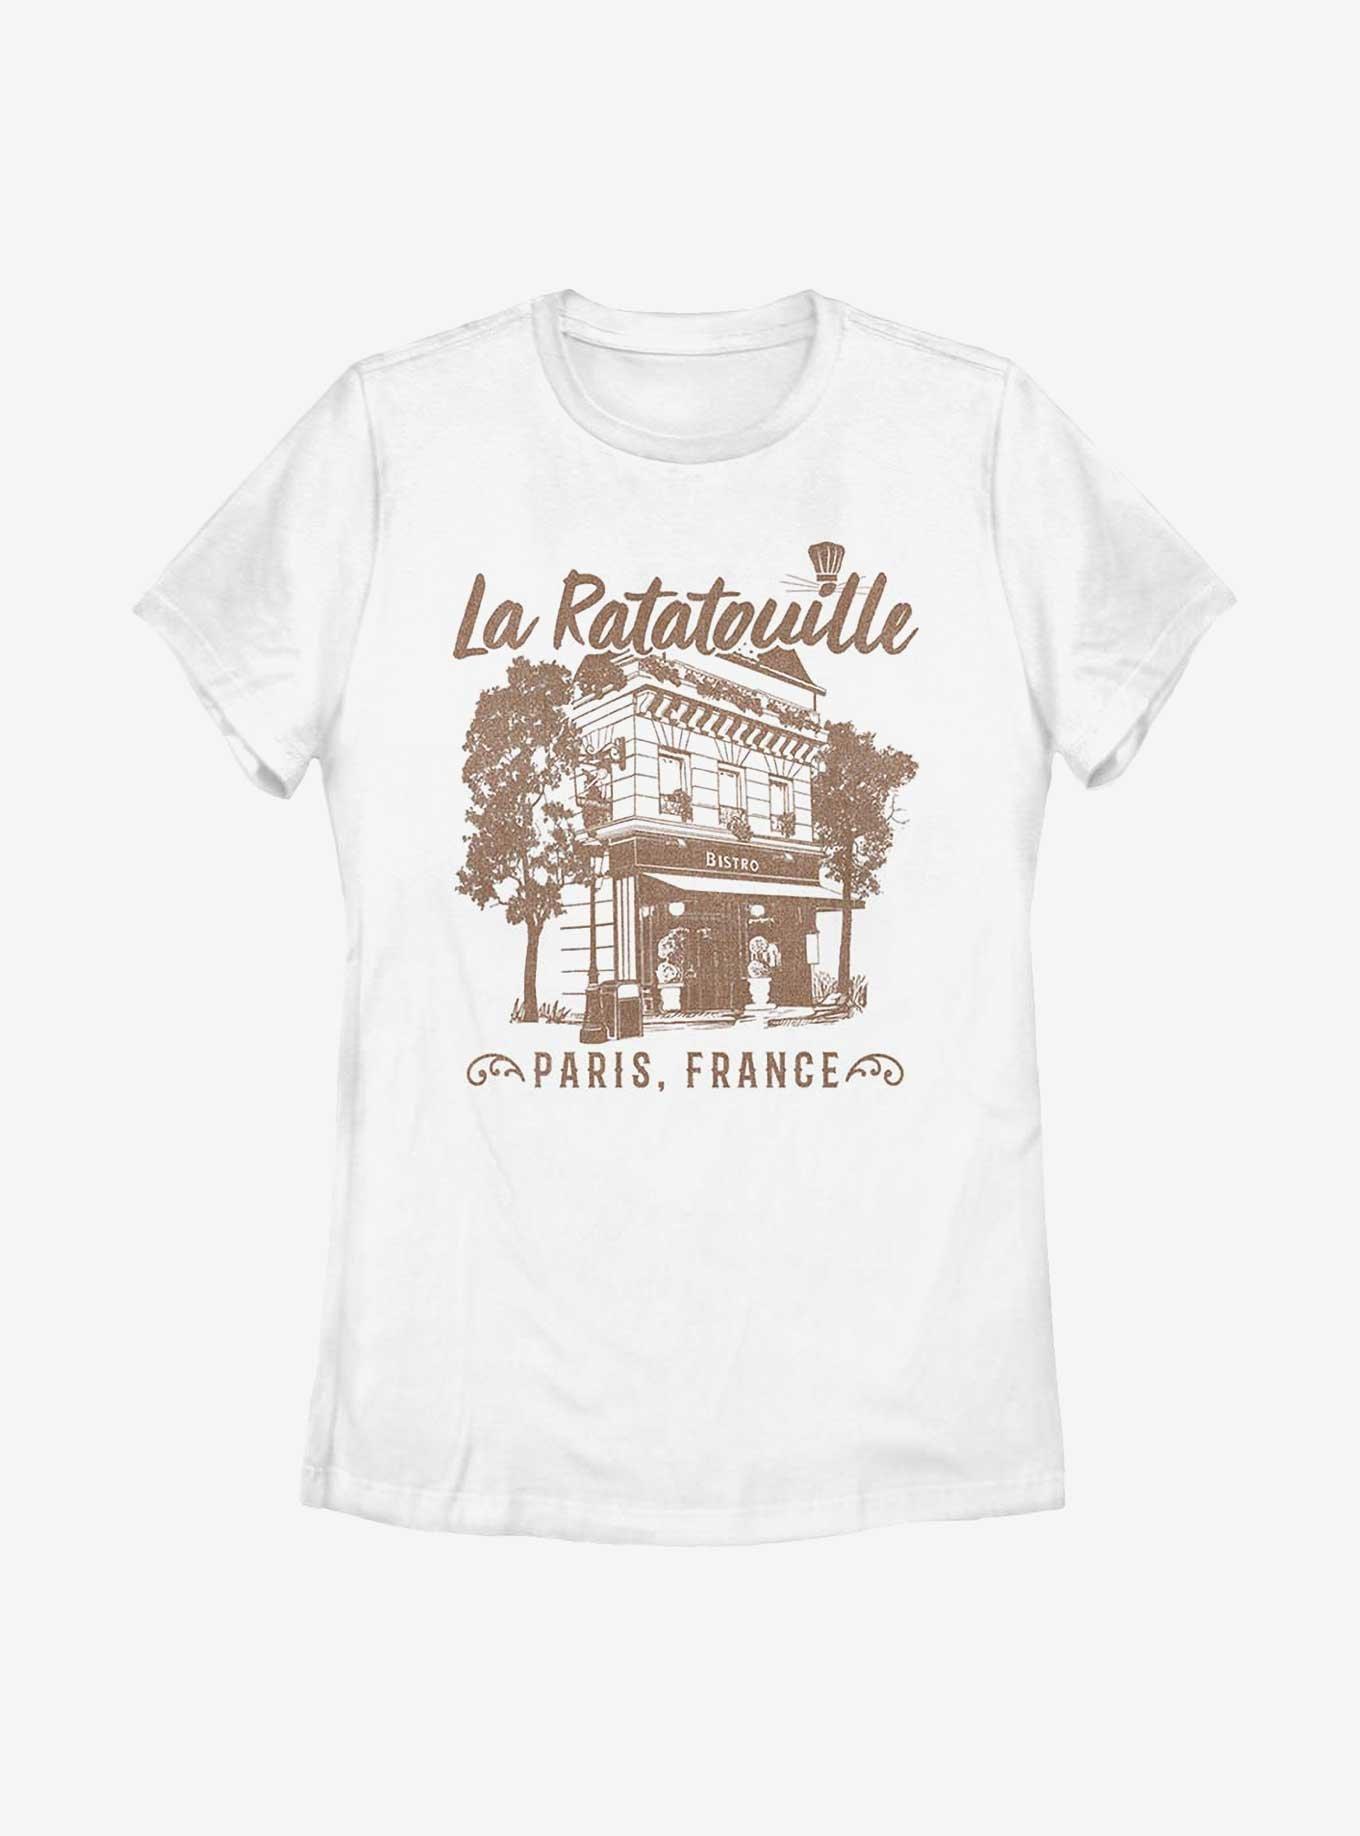 Disney Pixar Ratatouille Cafe Paris France Womens T-Shirt, WHITE, hi-res